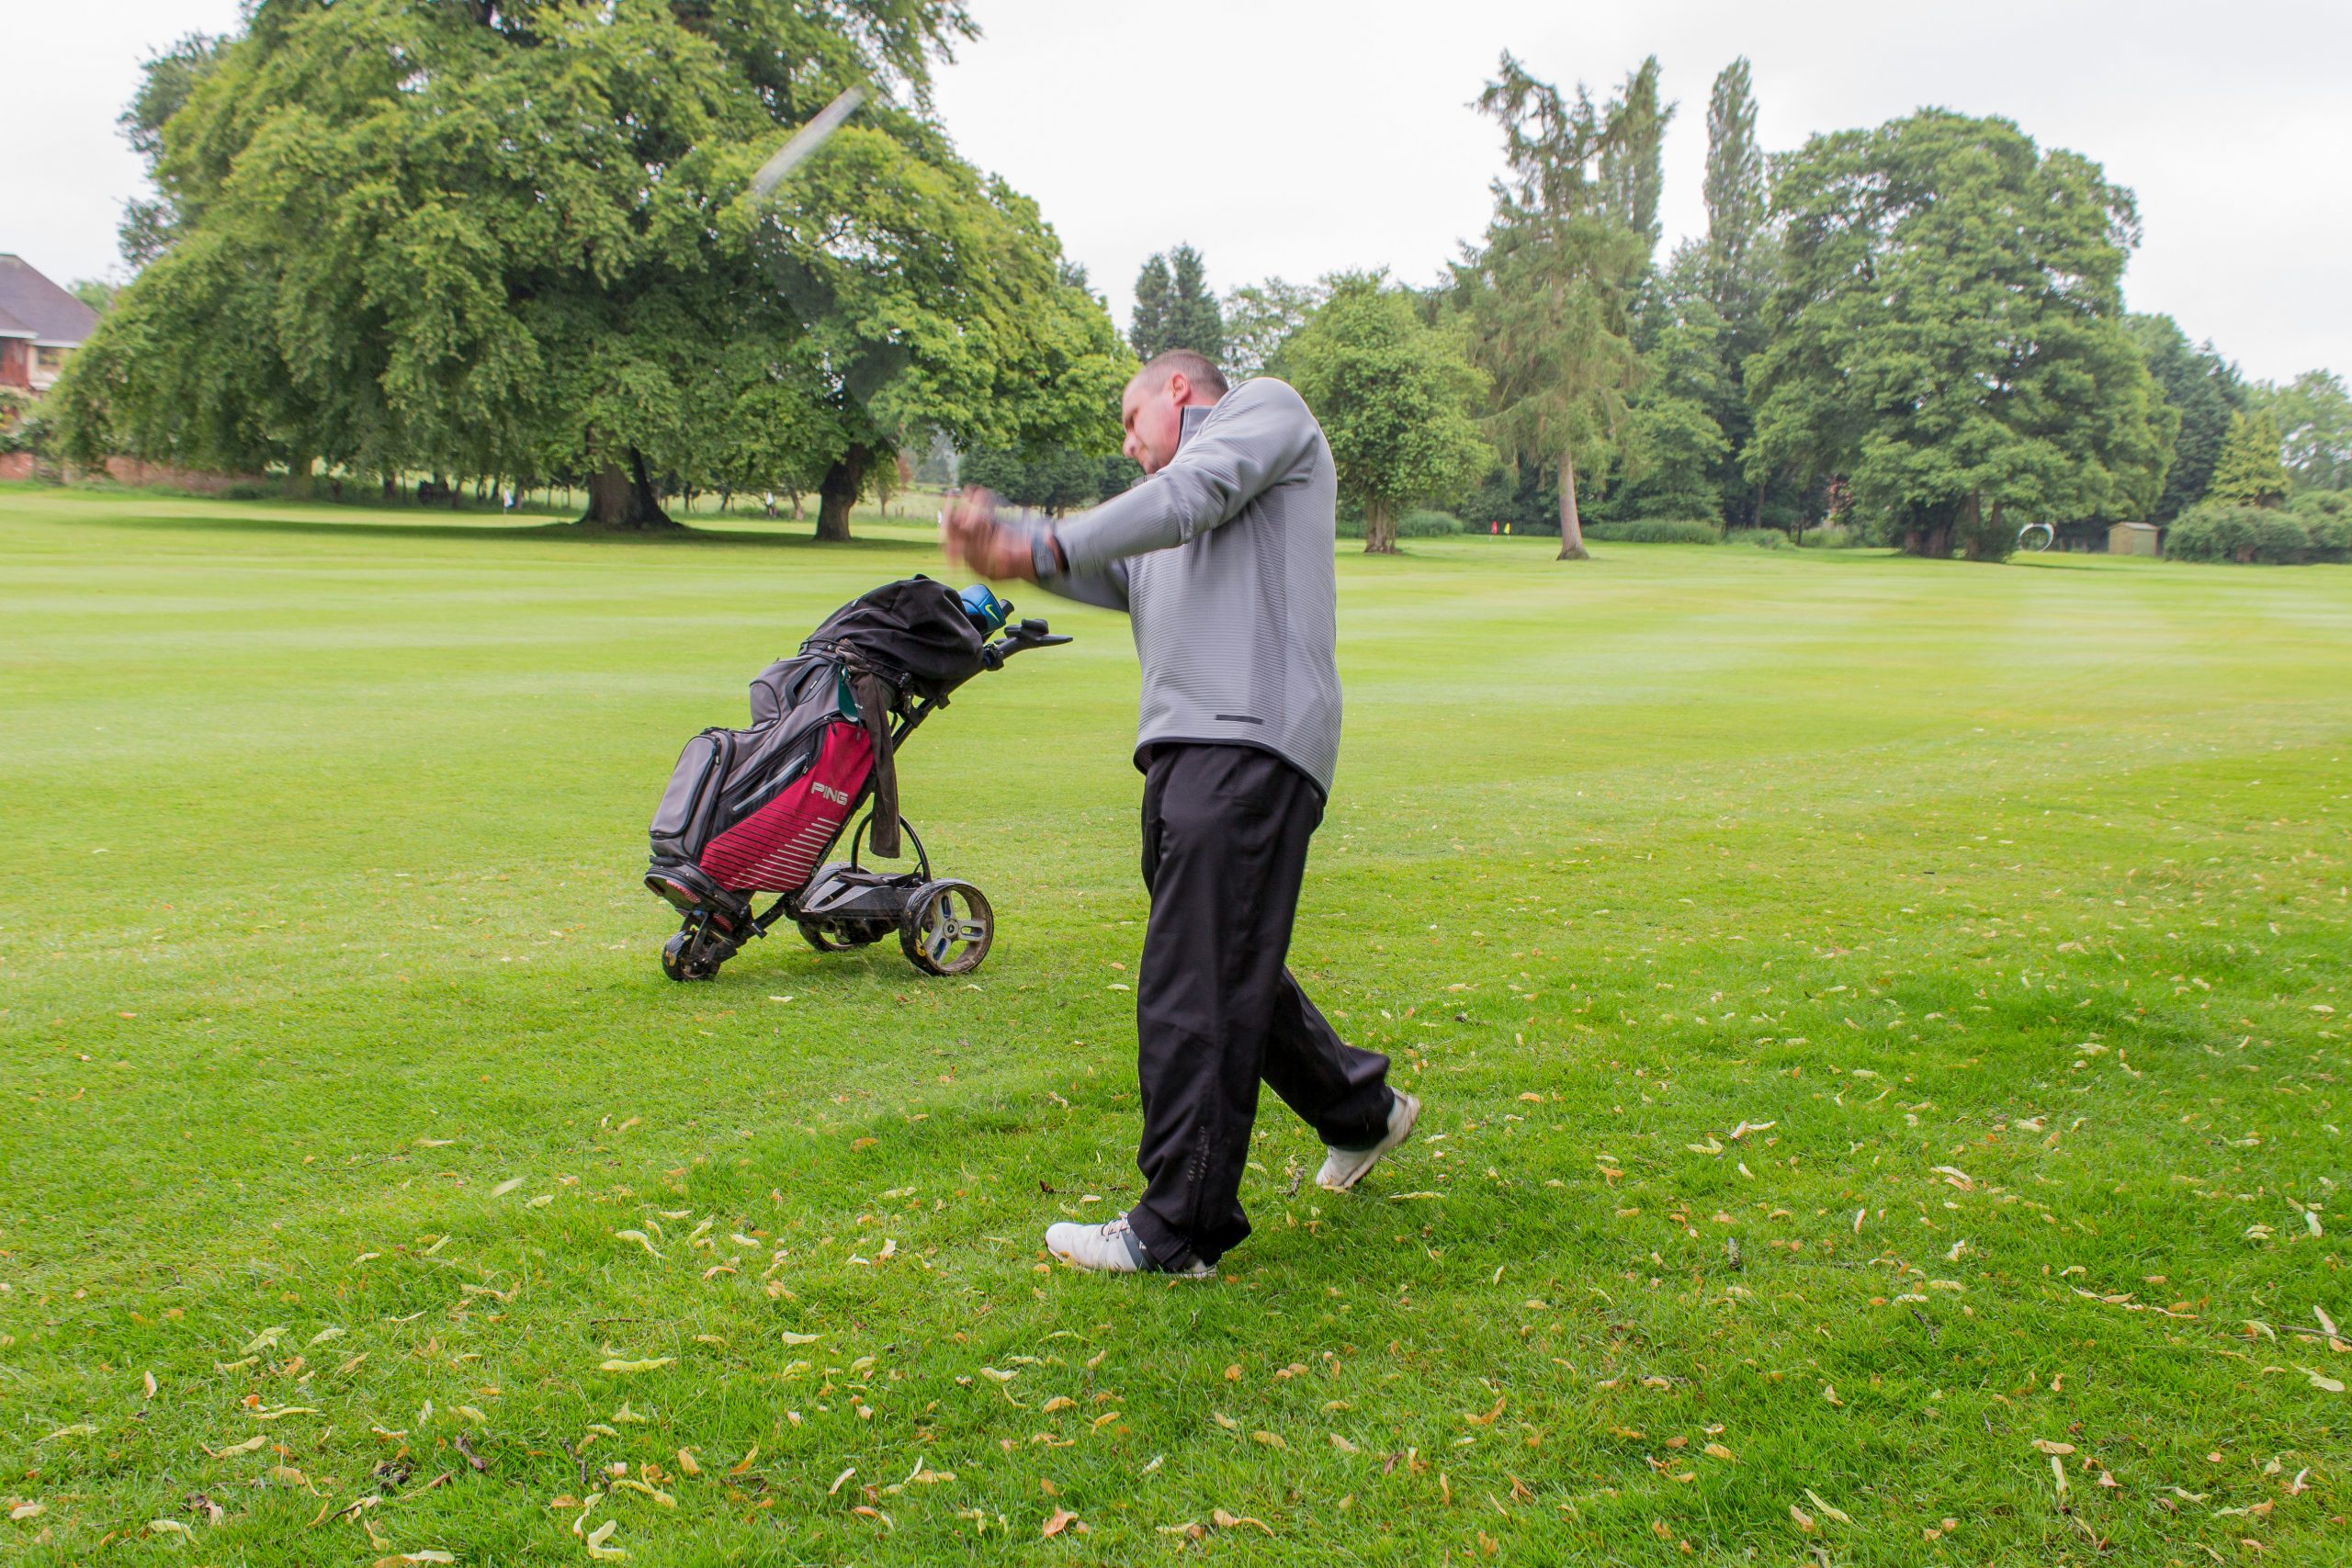 Man striking golf ball at a Katharine House Hospice charity golf event.